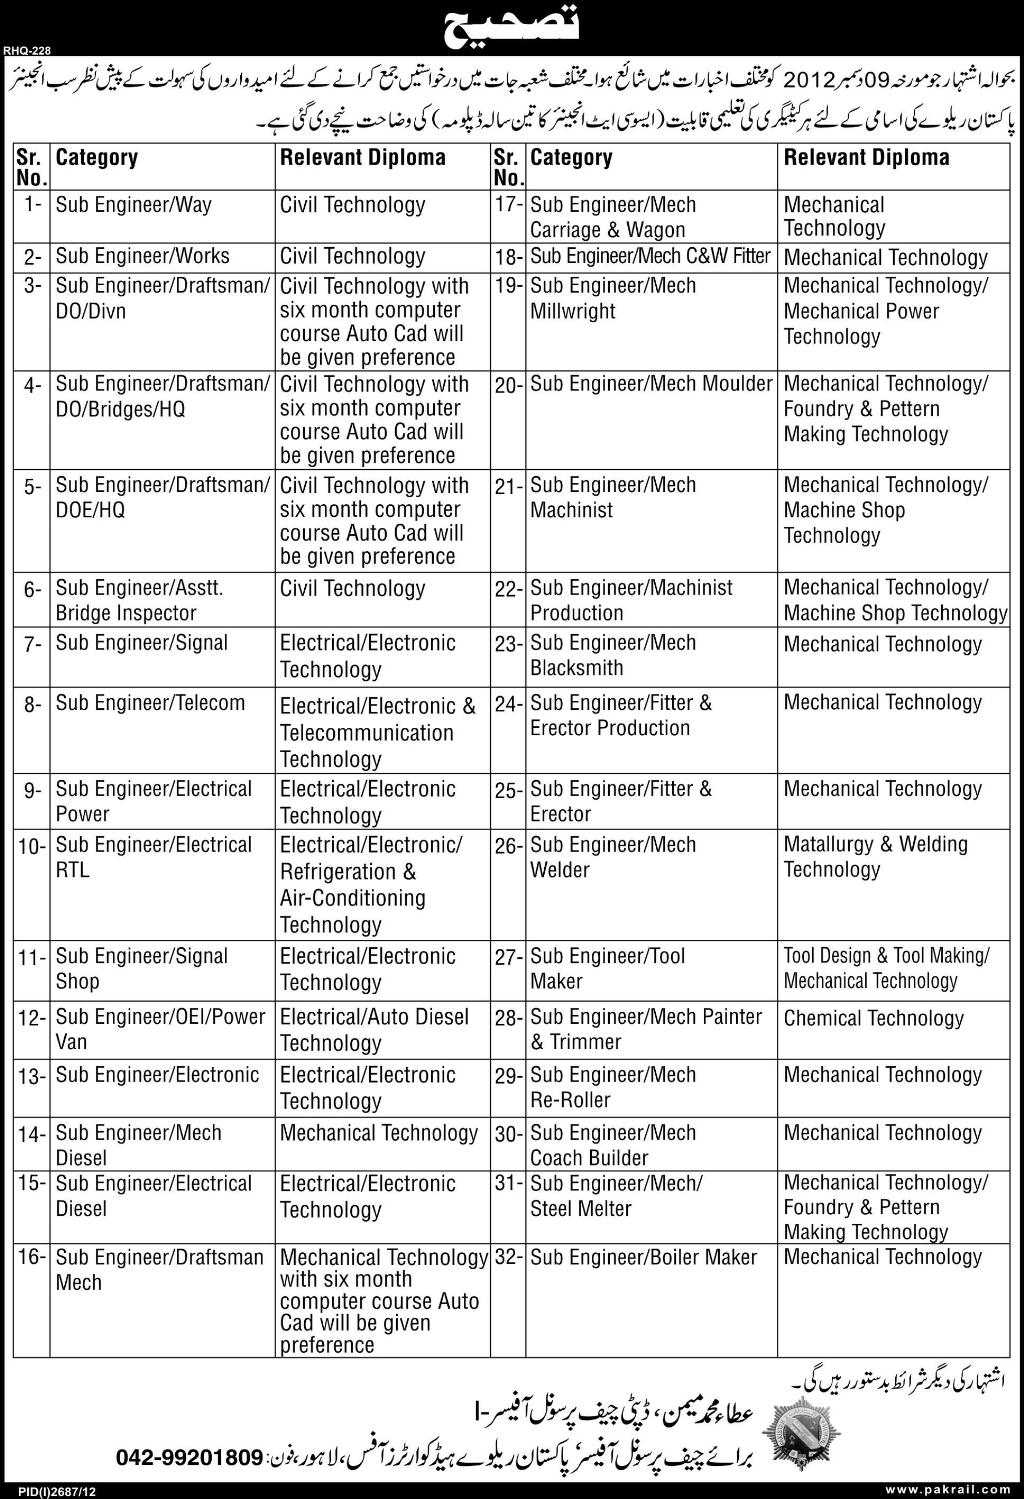 Addendum - Pakistan Railway Jobs in Lahore 2012 December for Sub Engineers